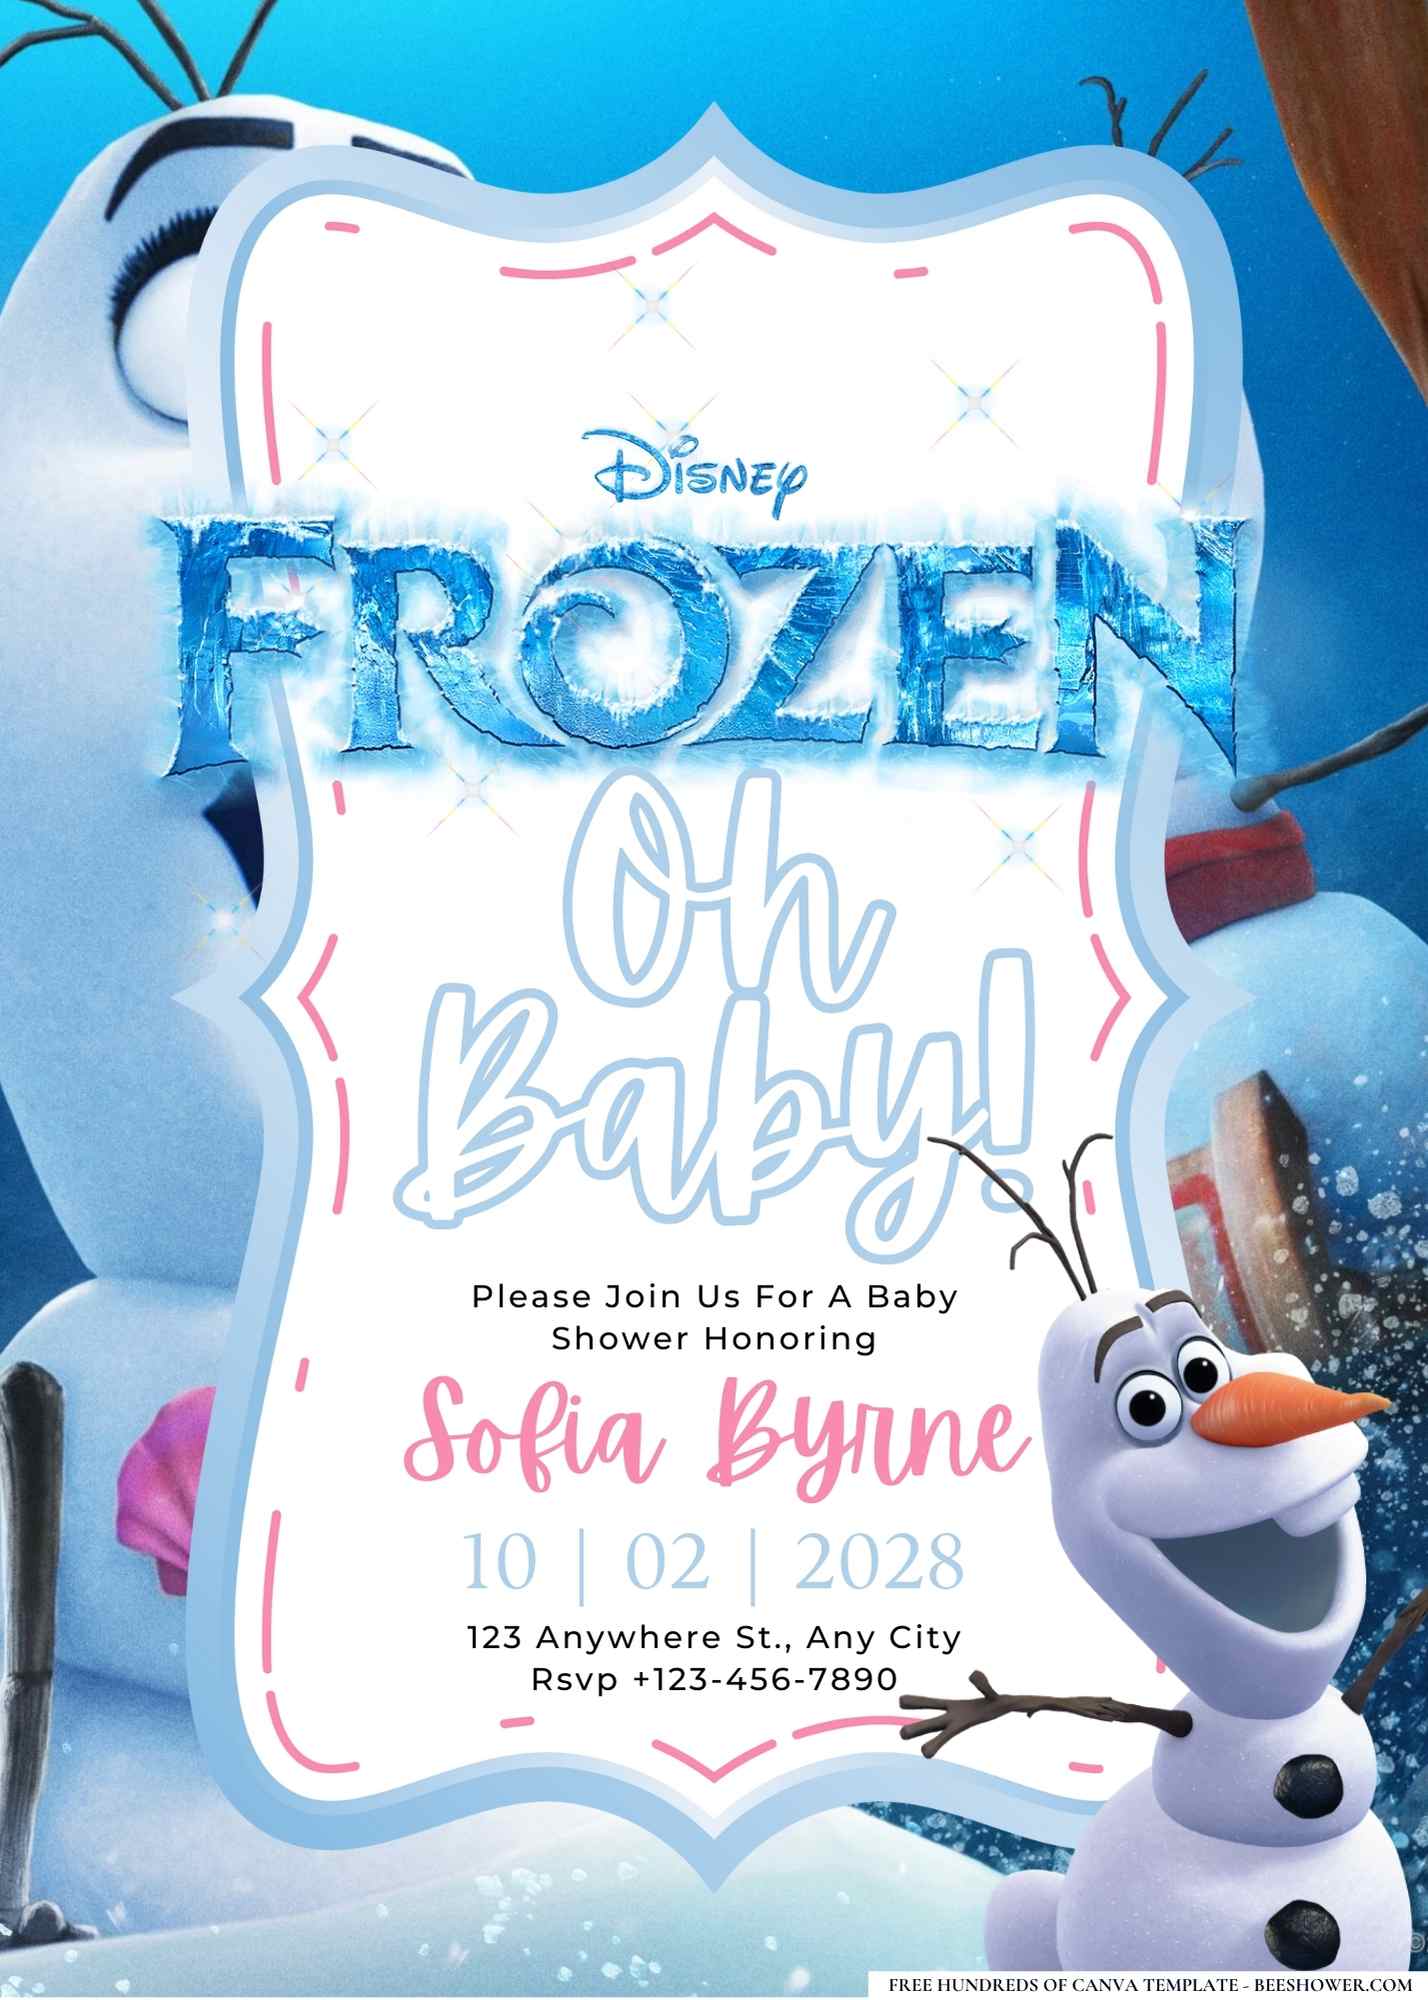 Olaf (Frozen) Baby Shower Invitation